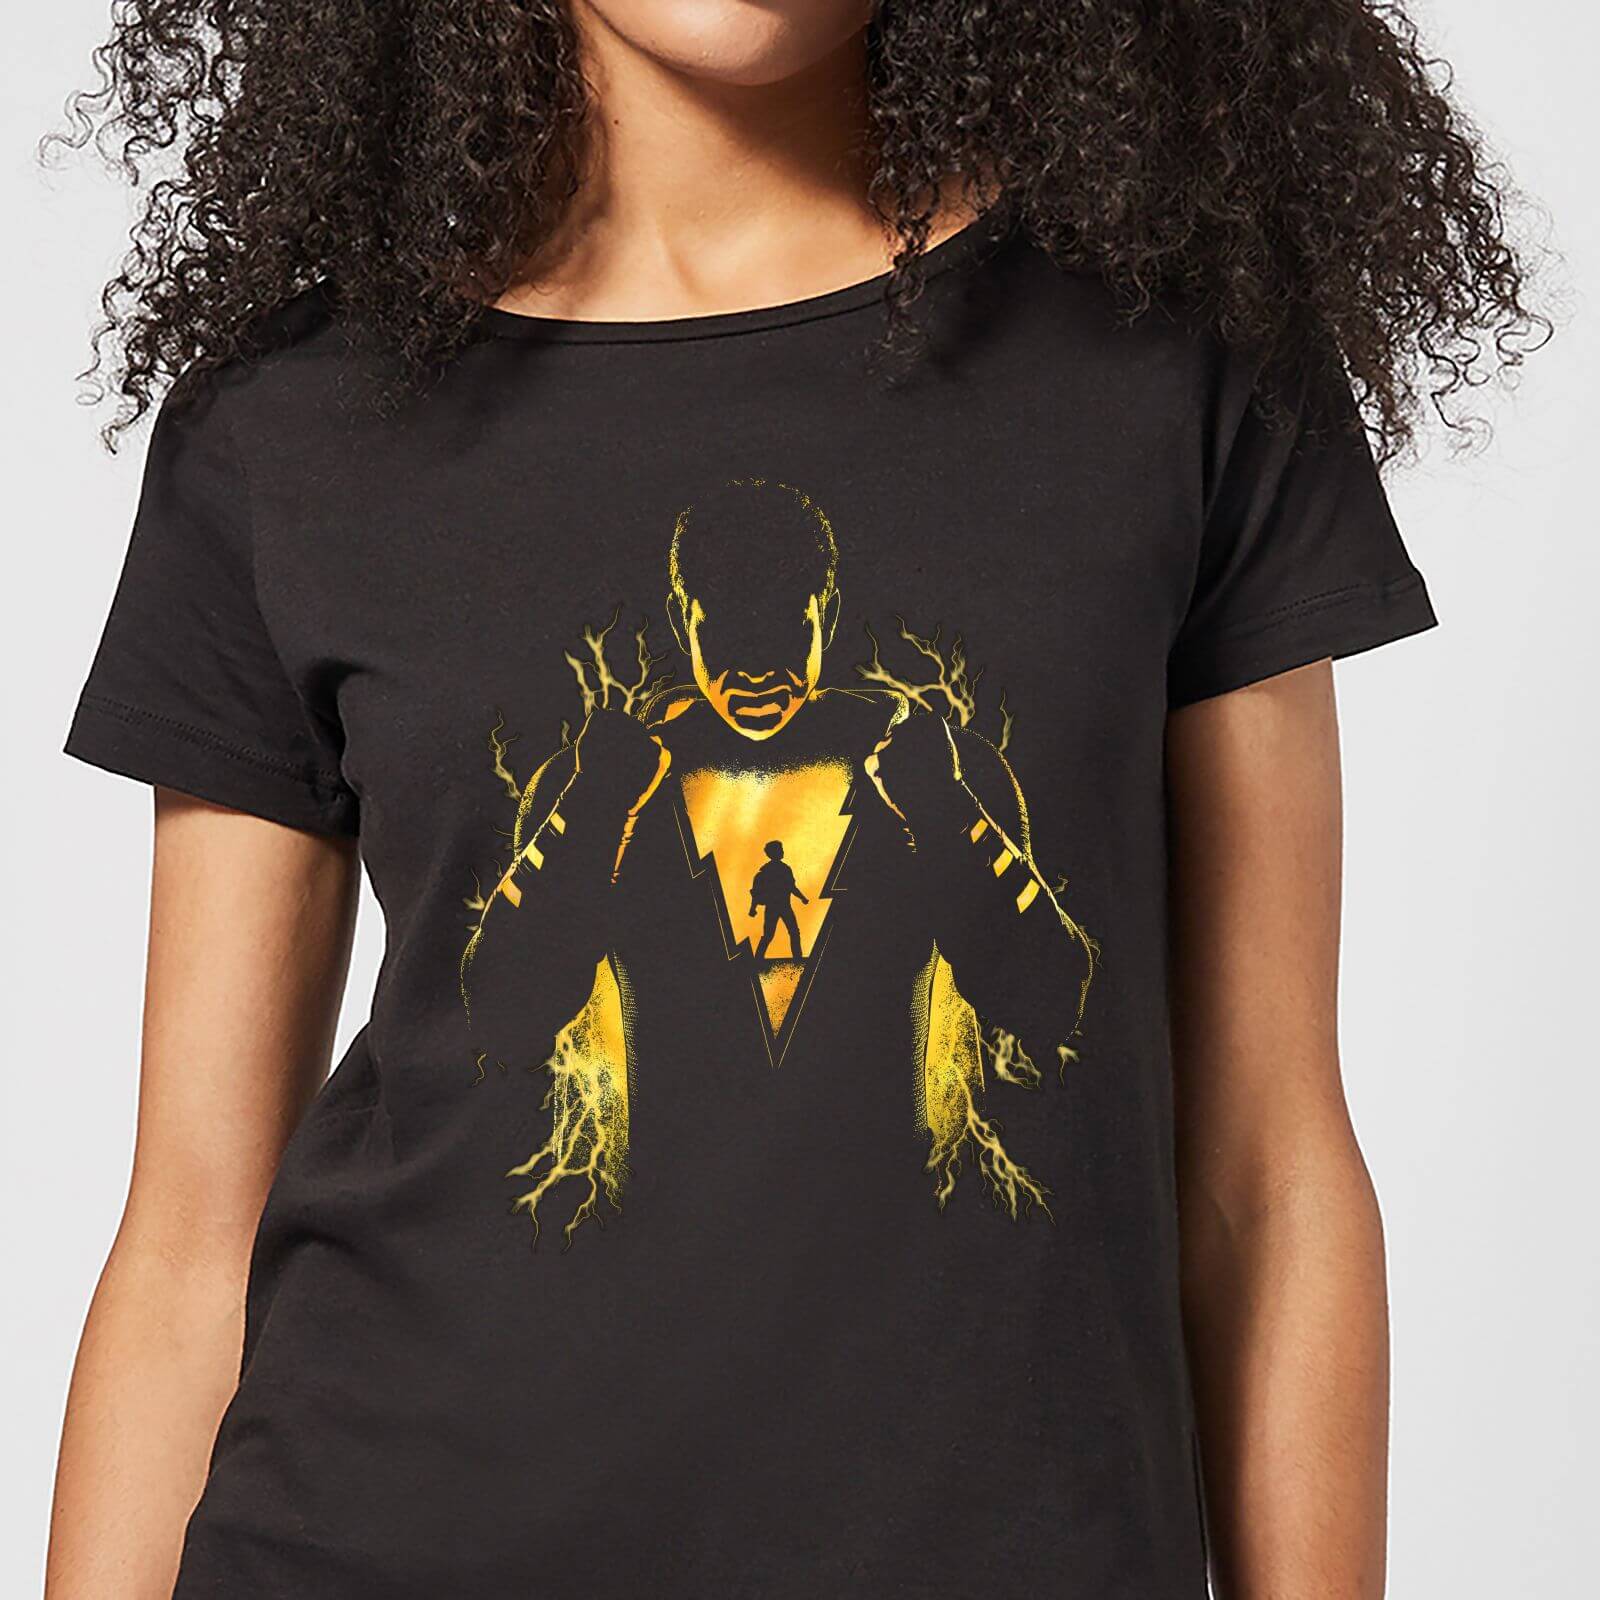 Dc Comics Shazam lightning silhouette women's t-shirt - black - xxl - black